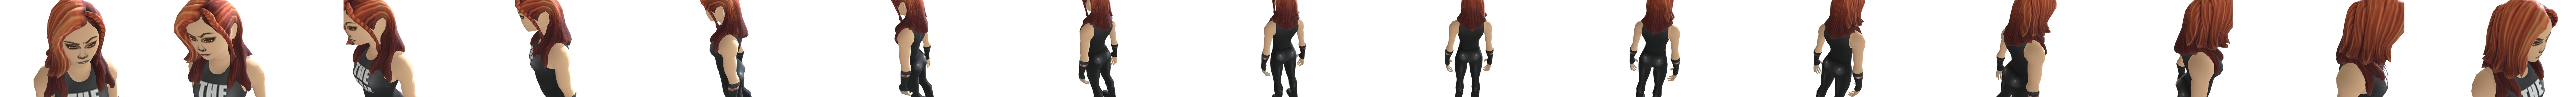 Wwe Becky Lynch Roblox 3d Model By Mrscottypieey Minecraftgamerpc64 9a82e8f - https www roblox com wwe